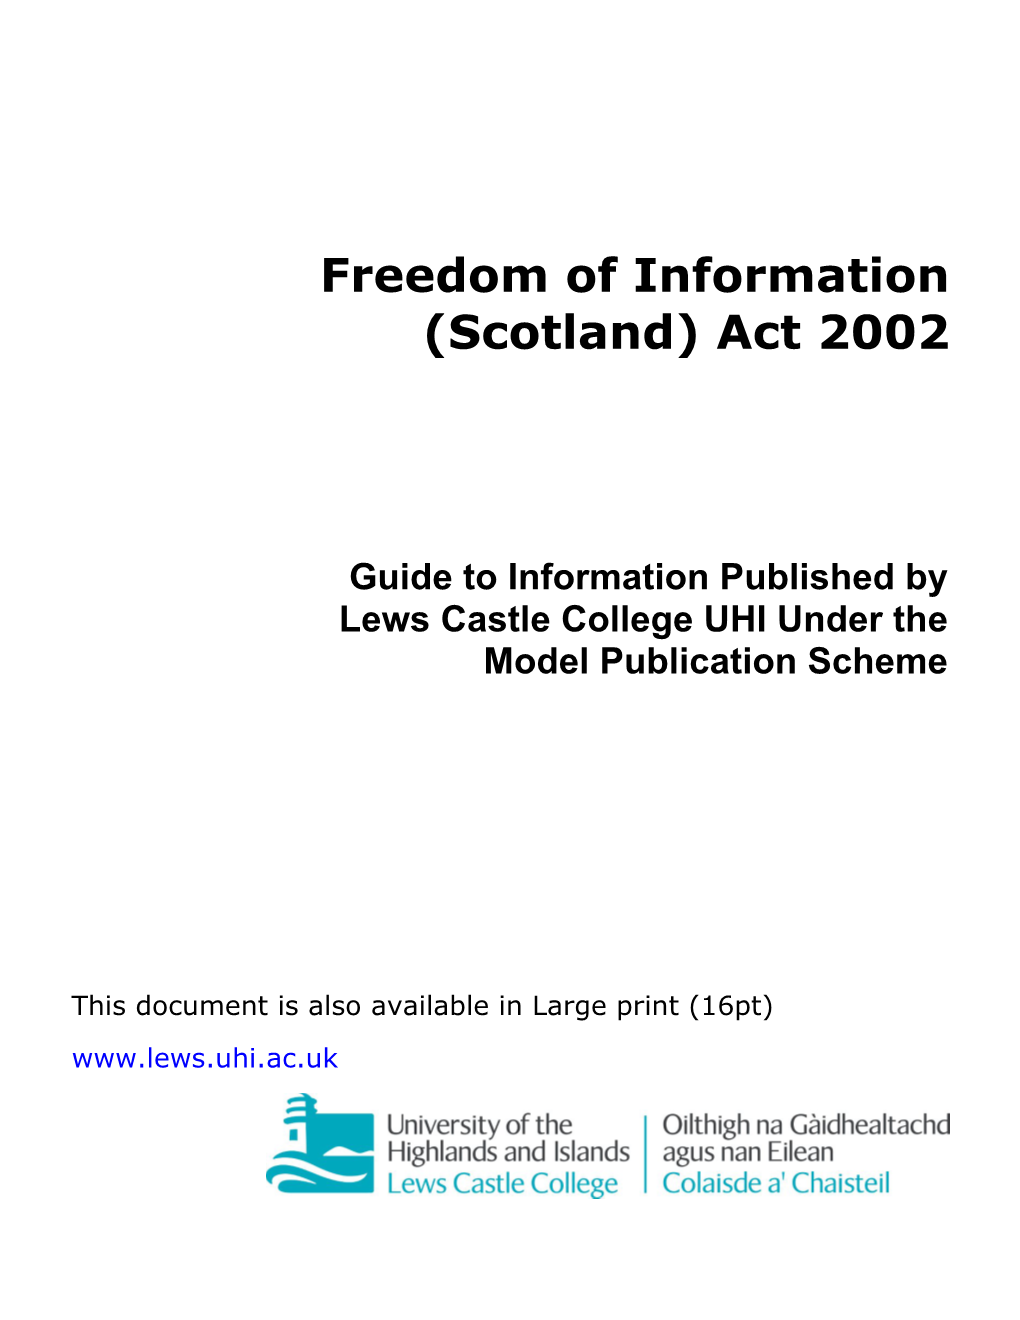 Scottish Model Publication Scheme